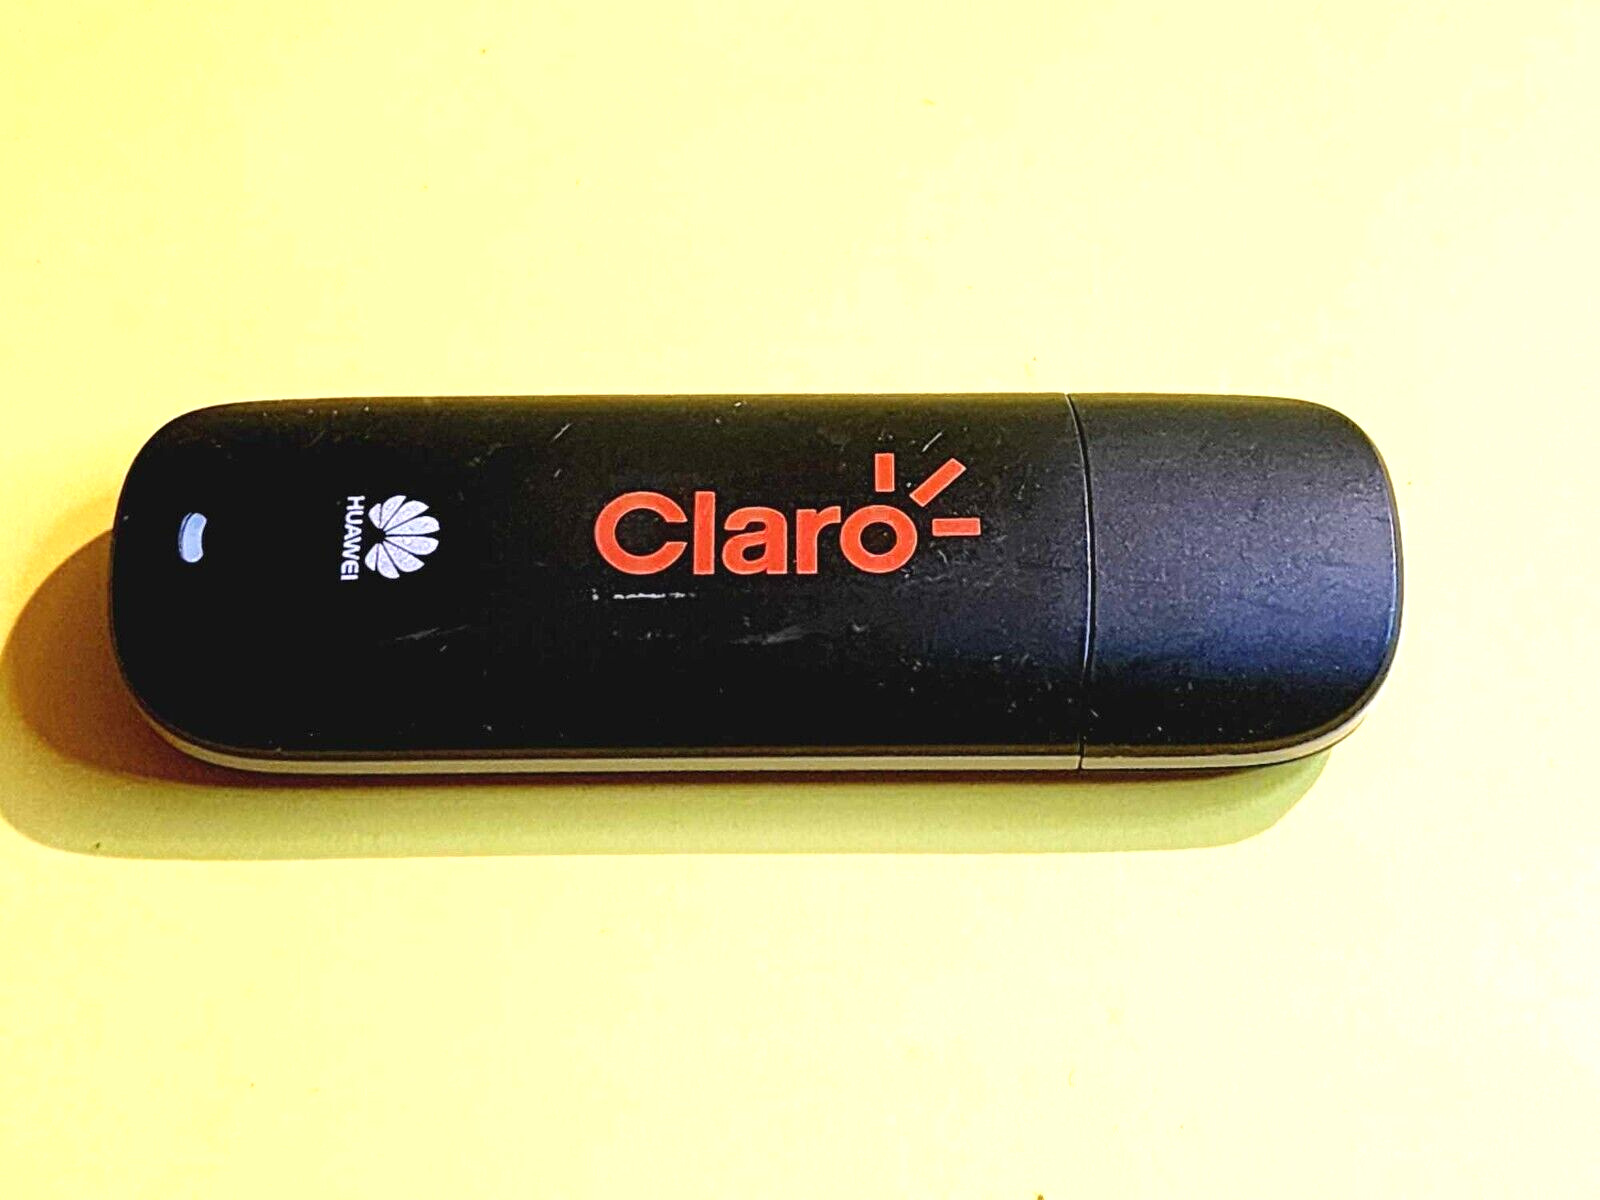 CLARO E713 E173u-1 HUAWEI MOBILE BROADBAND USB MODEM HSPA 3G STICK DONGLE BLACK